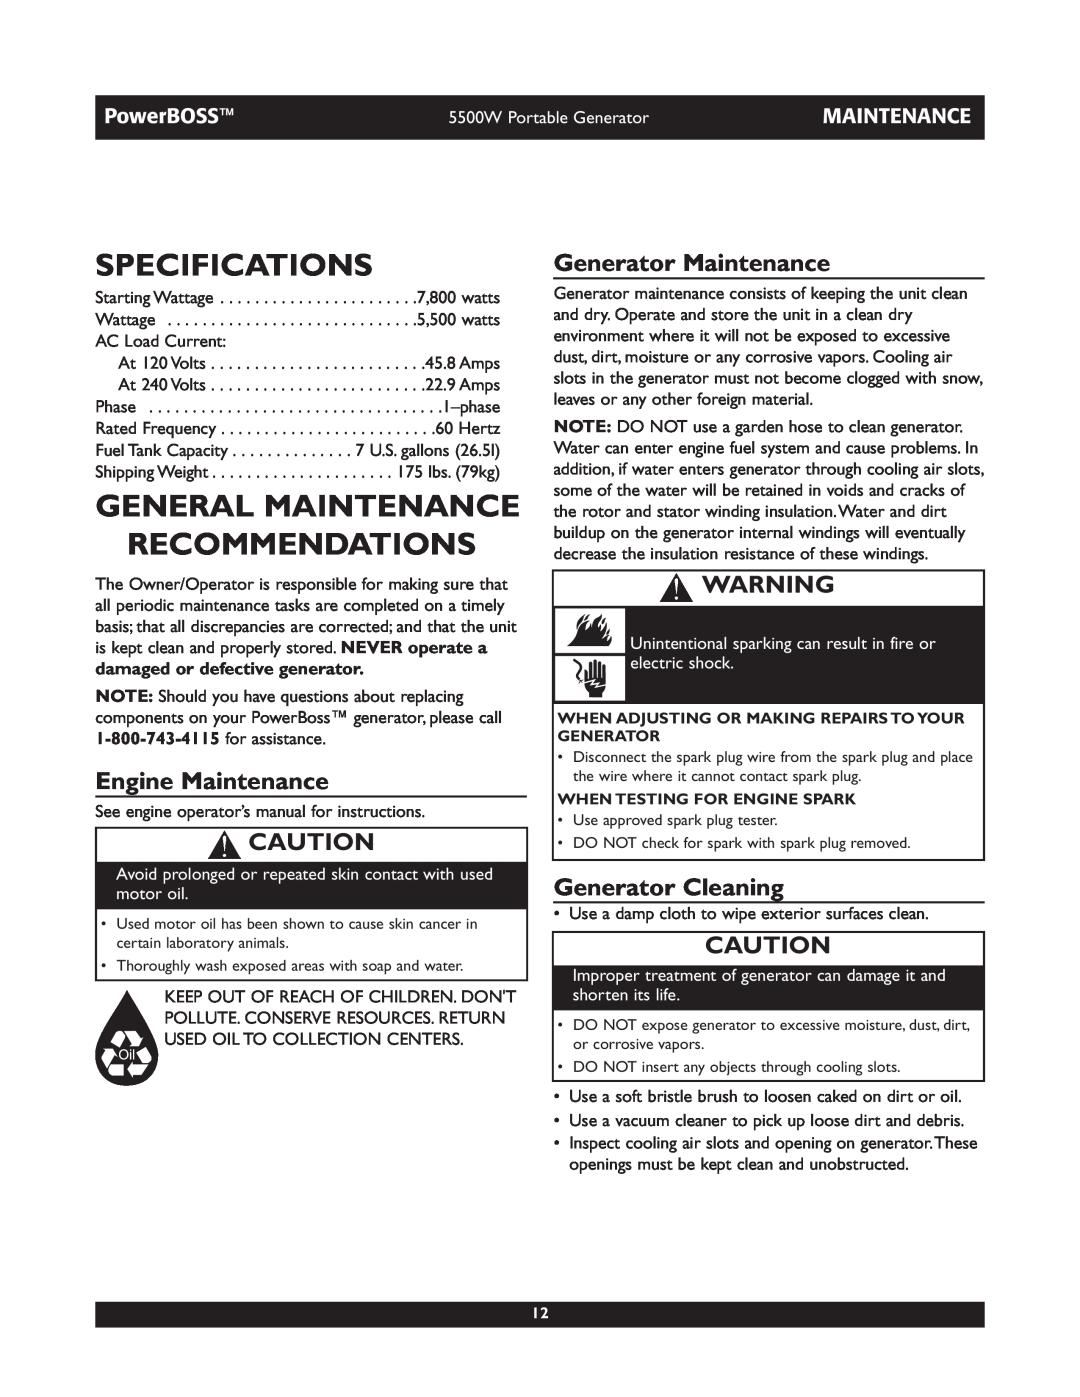 Briggs & Stratton 030249 Specifications, General Maintenance Recommendations, Engine Maintenance, Generator Maintenance 